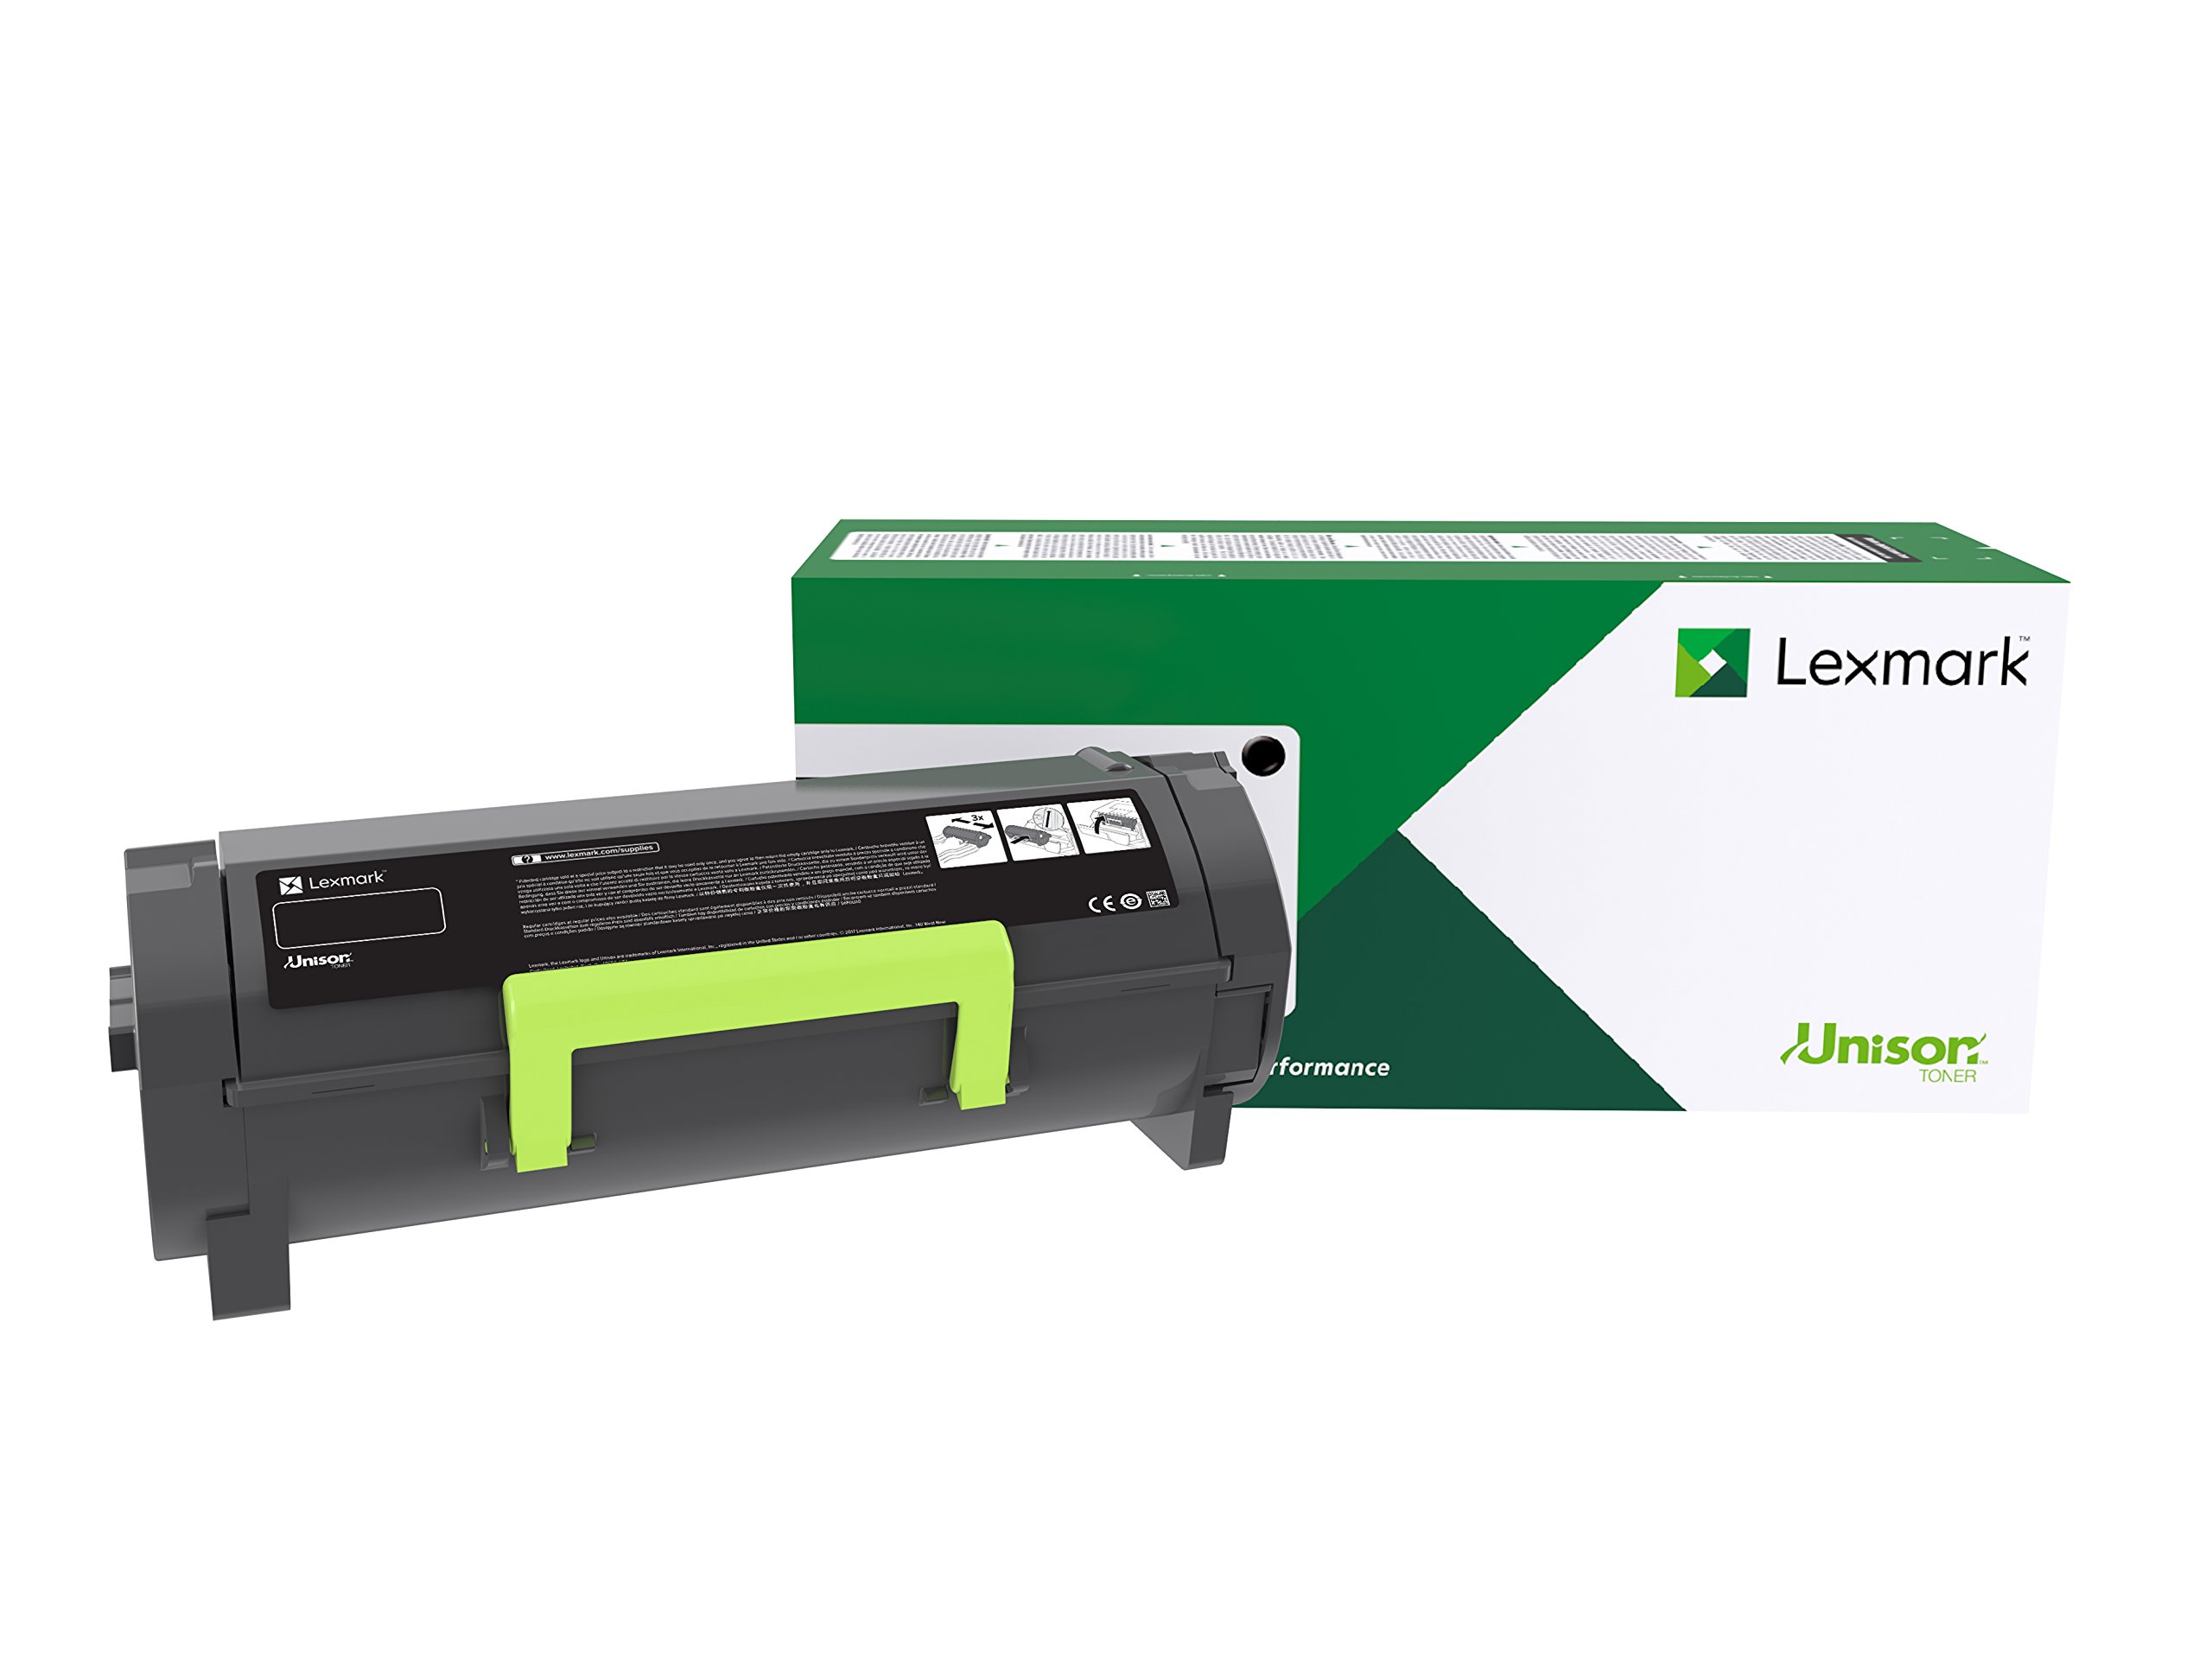 Lexmark Unison Toner Cartridge - Black - TAA Compliant